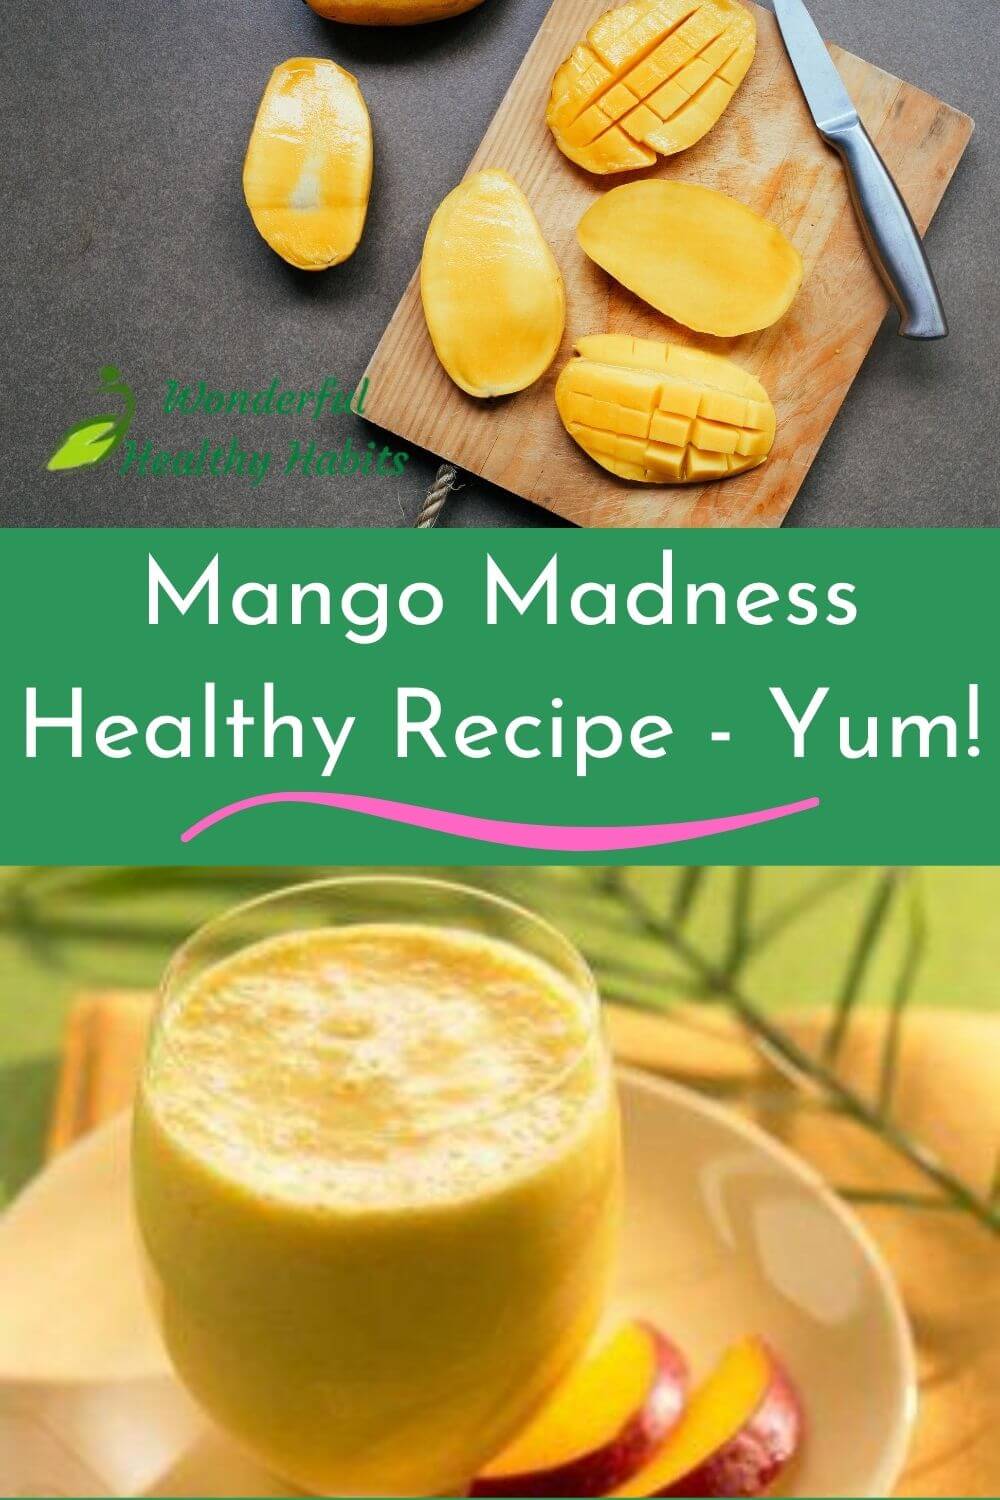 Mango Madness Healthy Recipe - Yum!